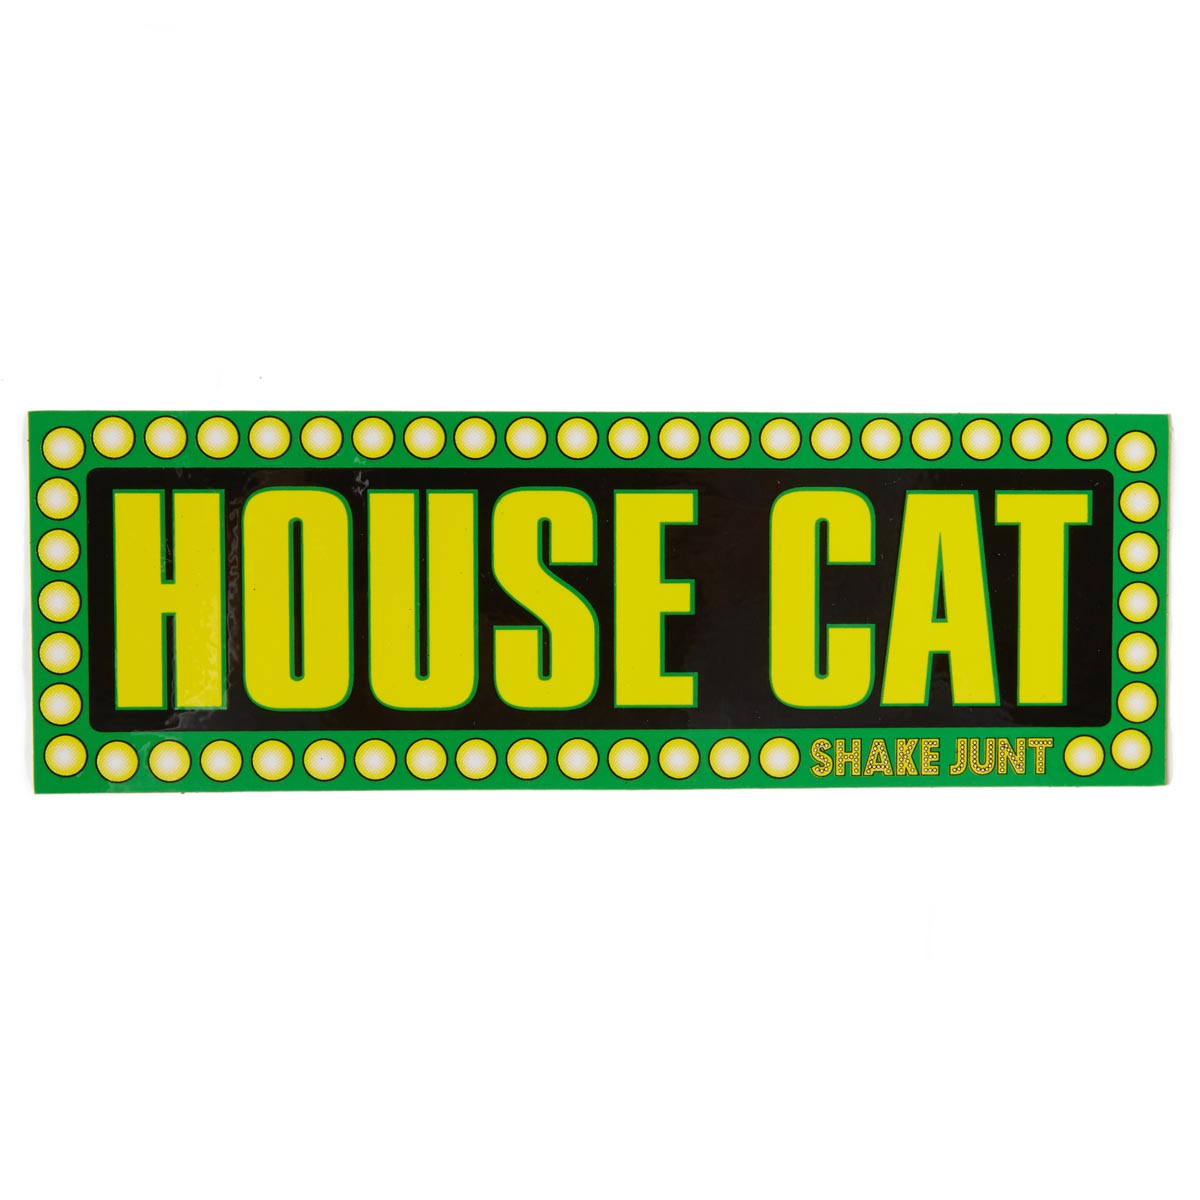 Shake Junt Bumper Sticker - House Cat image 1